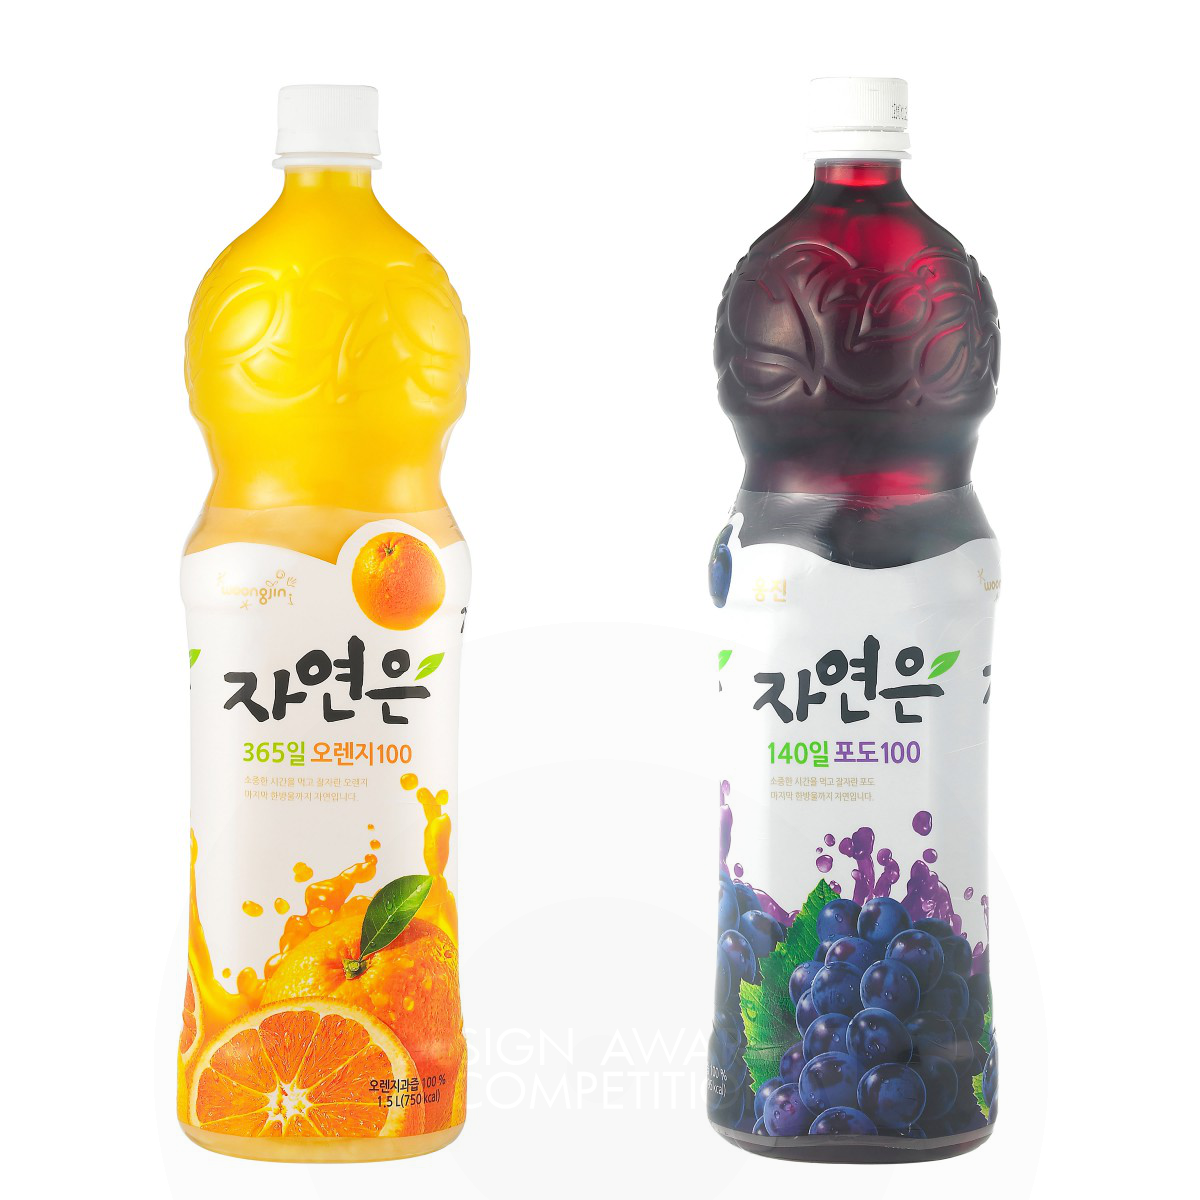 Nature beverage by Woongjin Food Design Team